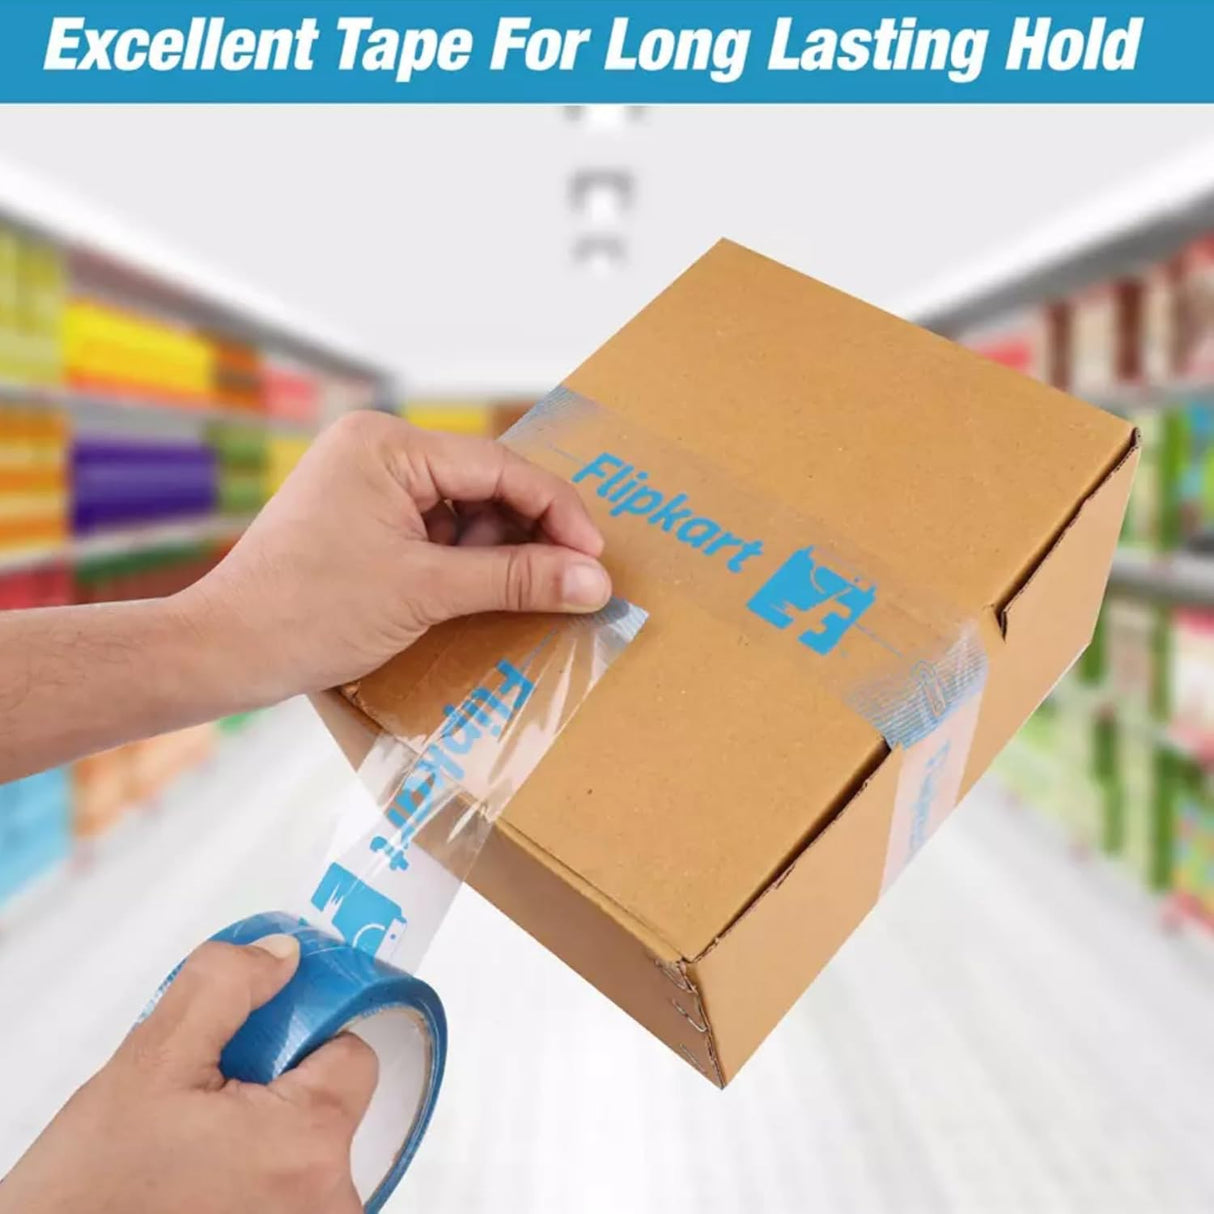 SINGHAL Flip kart Branded Packaging Tape, 5 CM x 65 Meter, E- Commerce Printed Tape (Pack of 12)